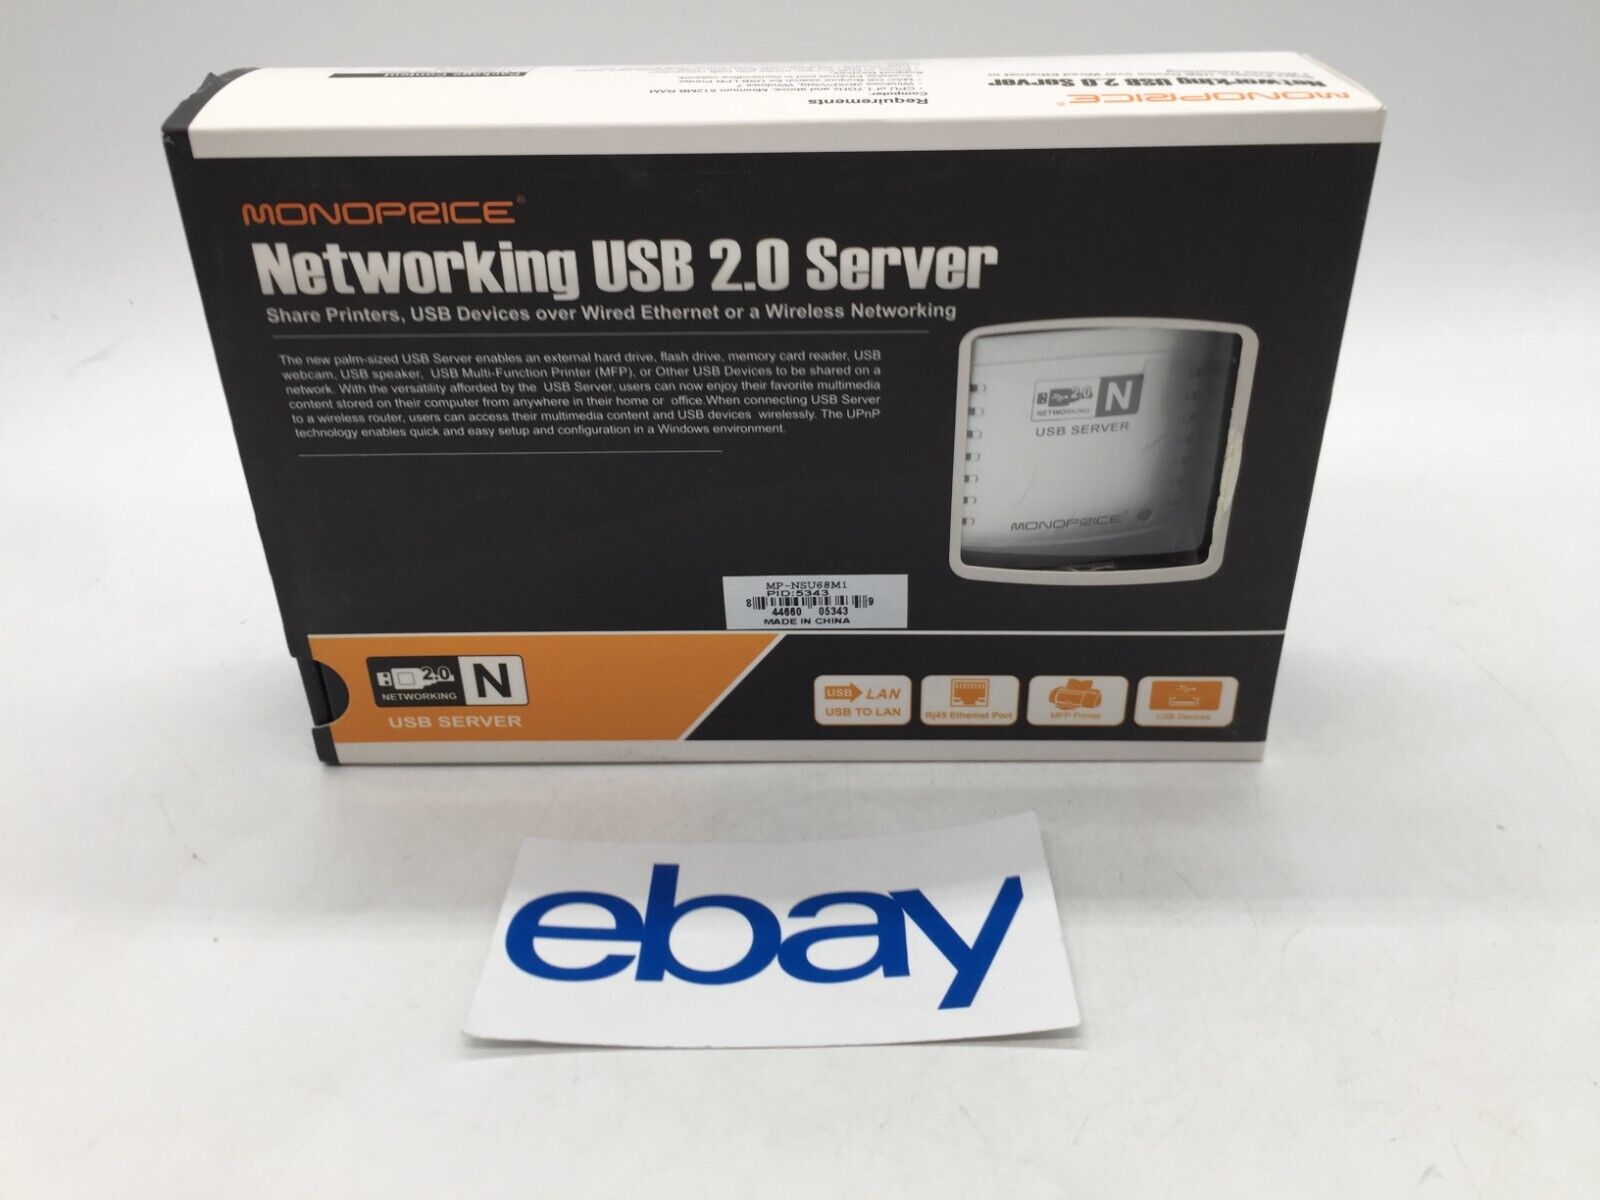 New Monoprice Networking USB 2.0 Server MS-NU68M1 FREE S/H